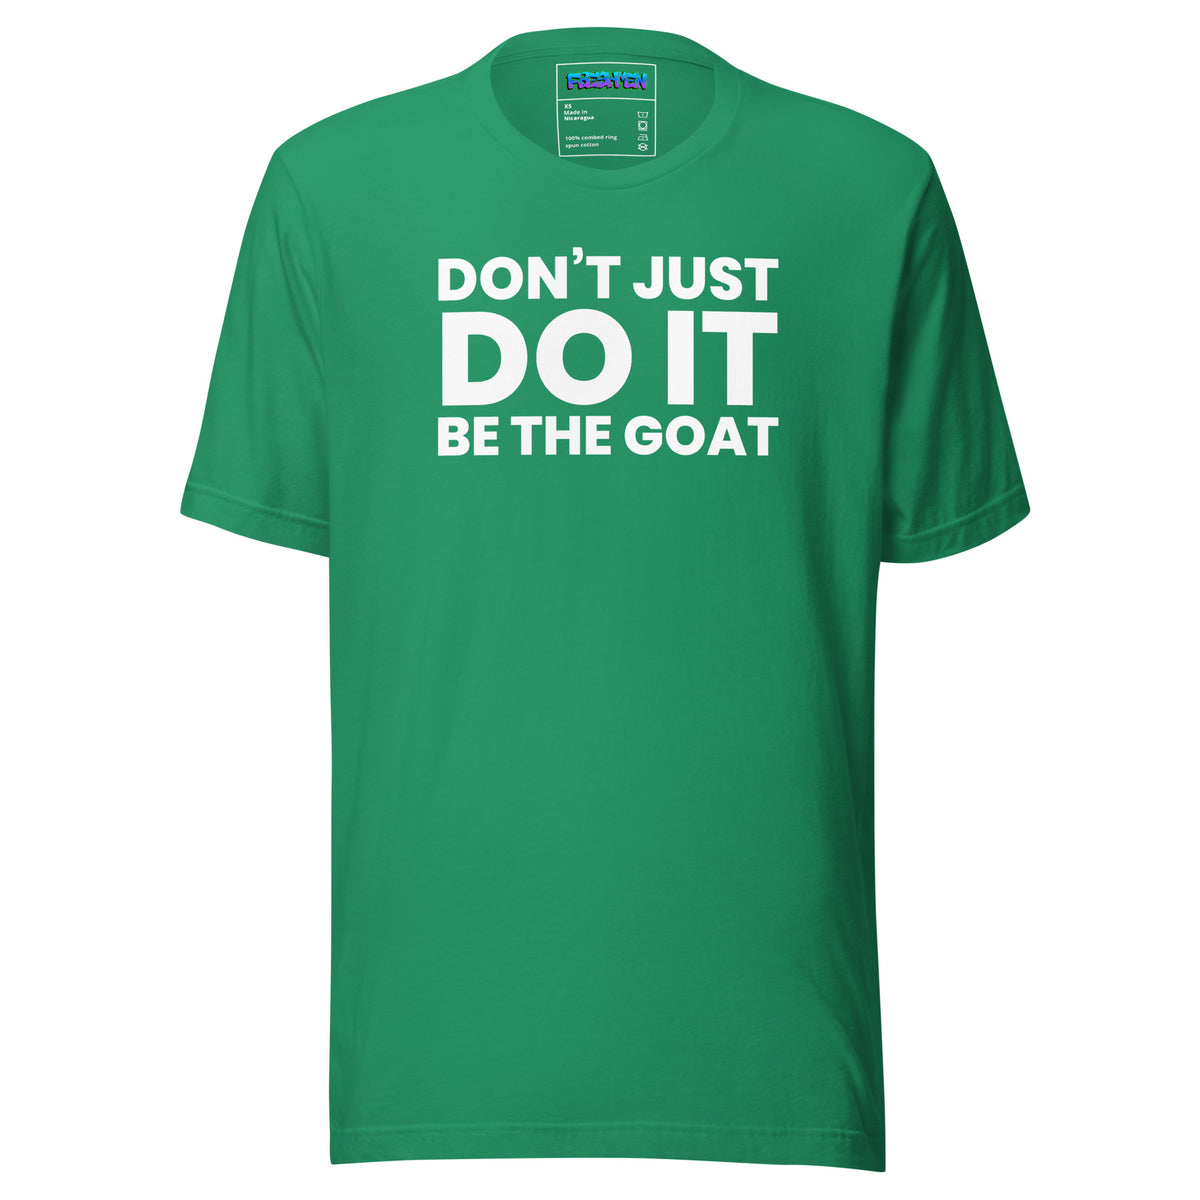 Freshmen Be the Goat Unisex T-Shirt